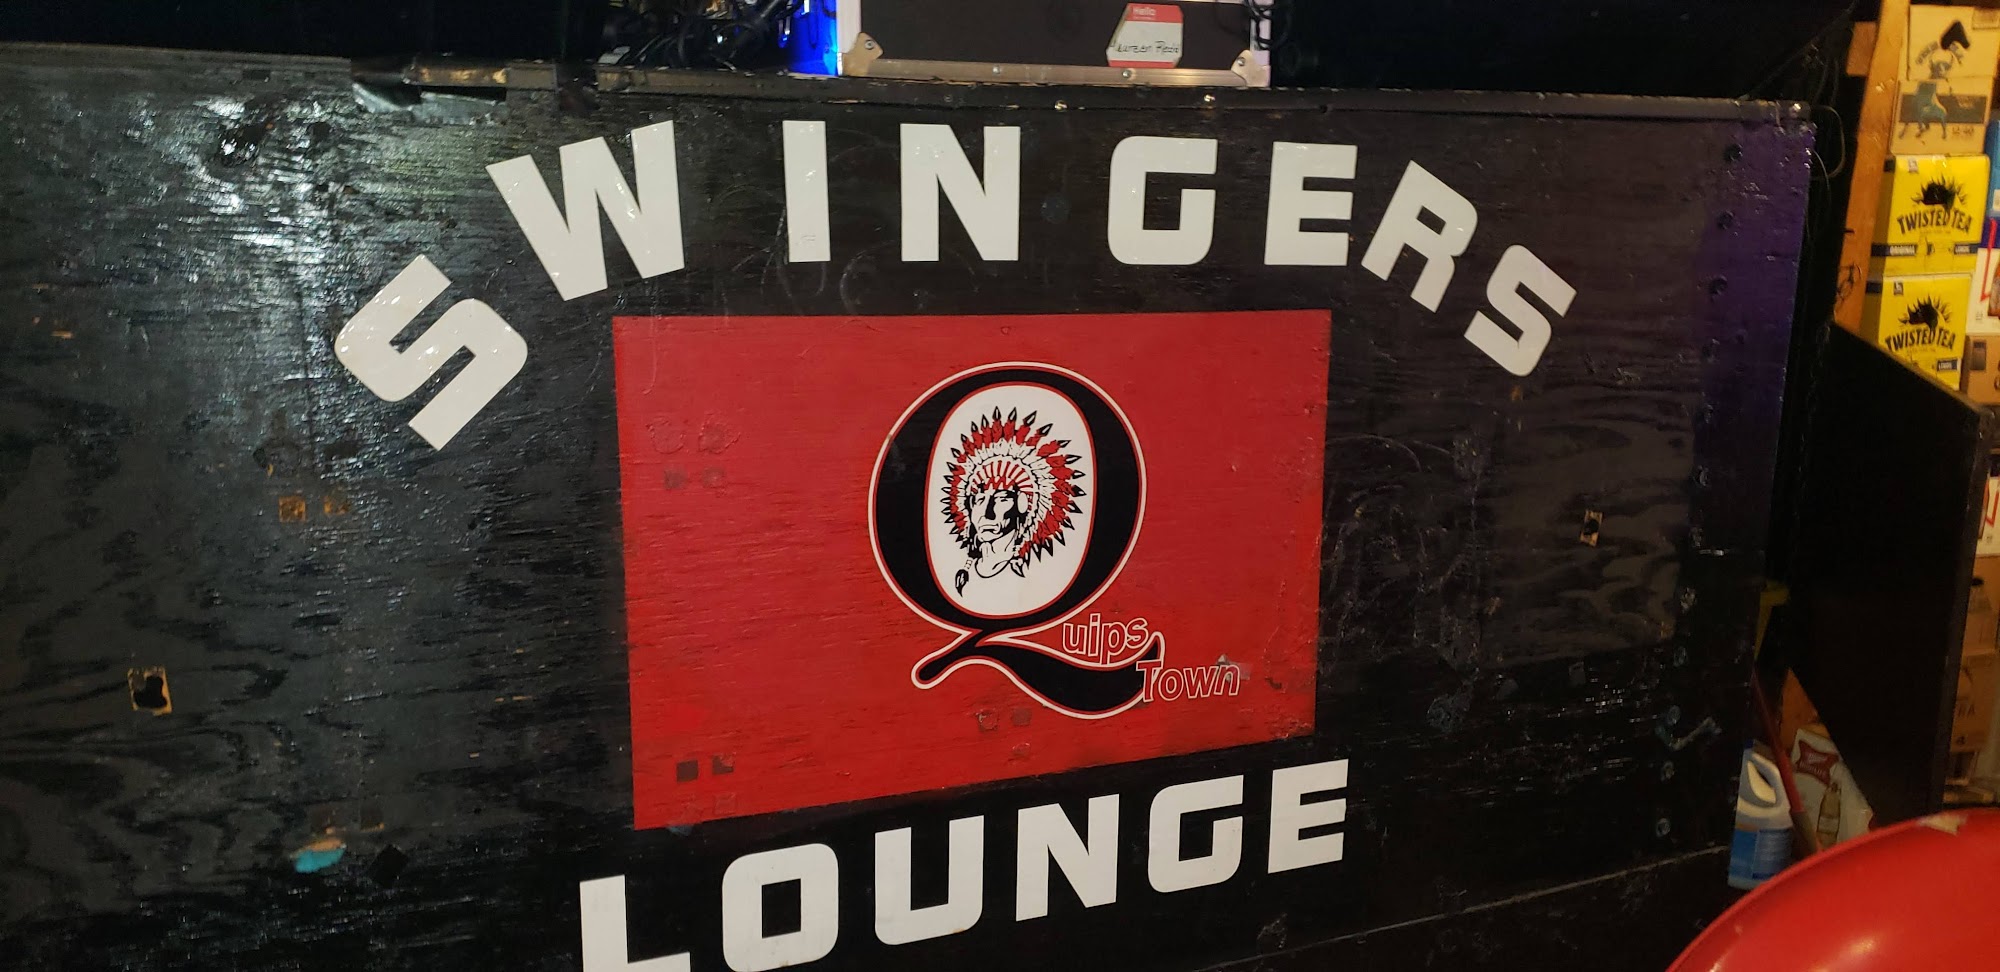 The Swínger's Lounge